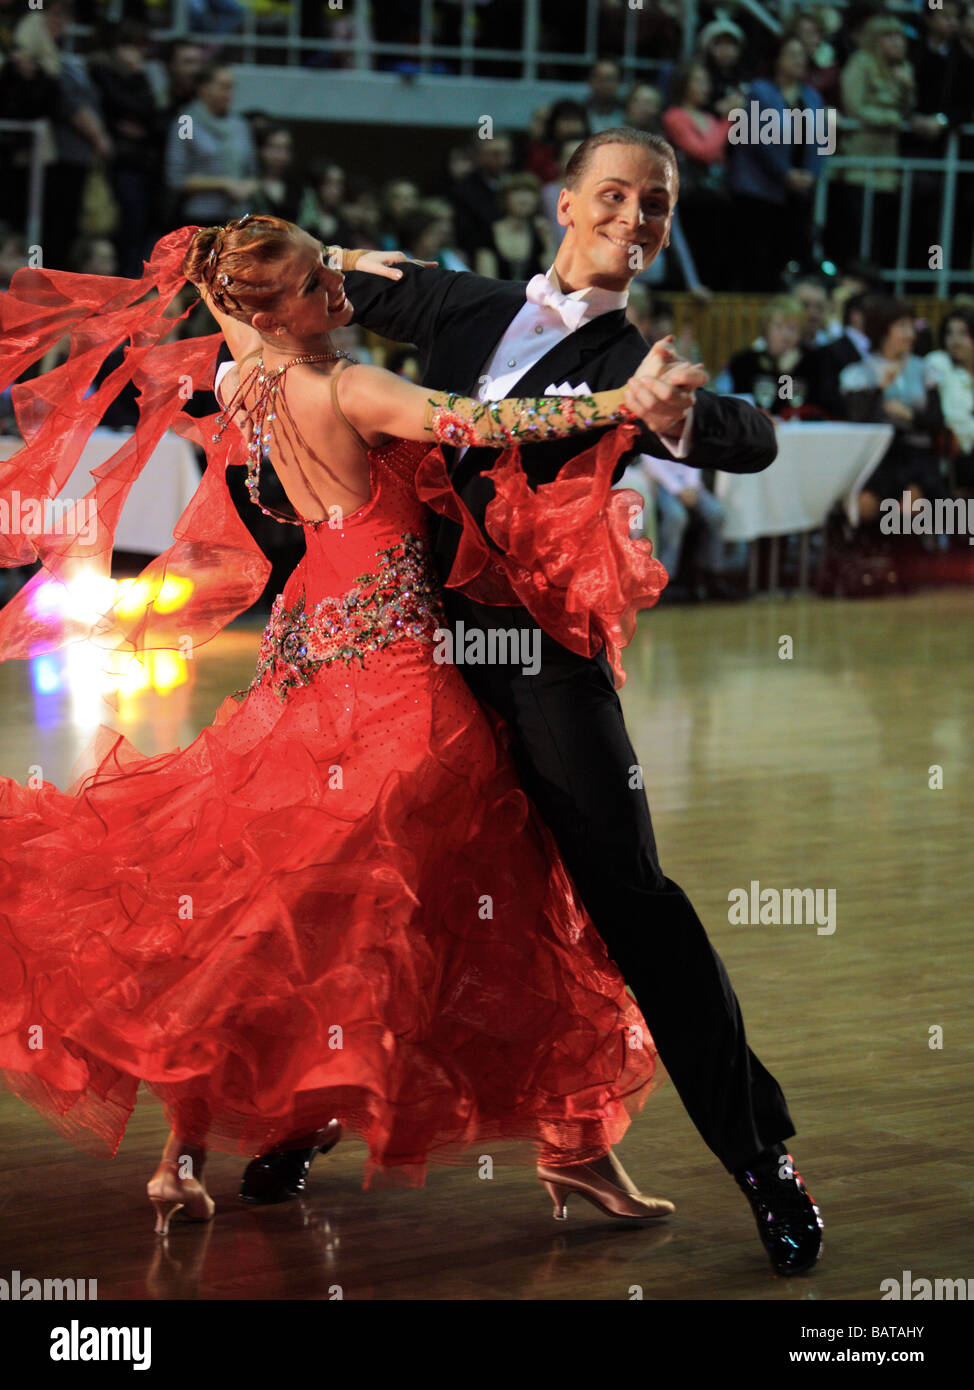 Professional Ballroom Dancers Dancing Stock Photo - Alamy